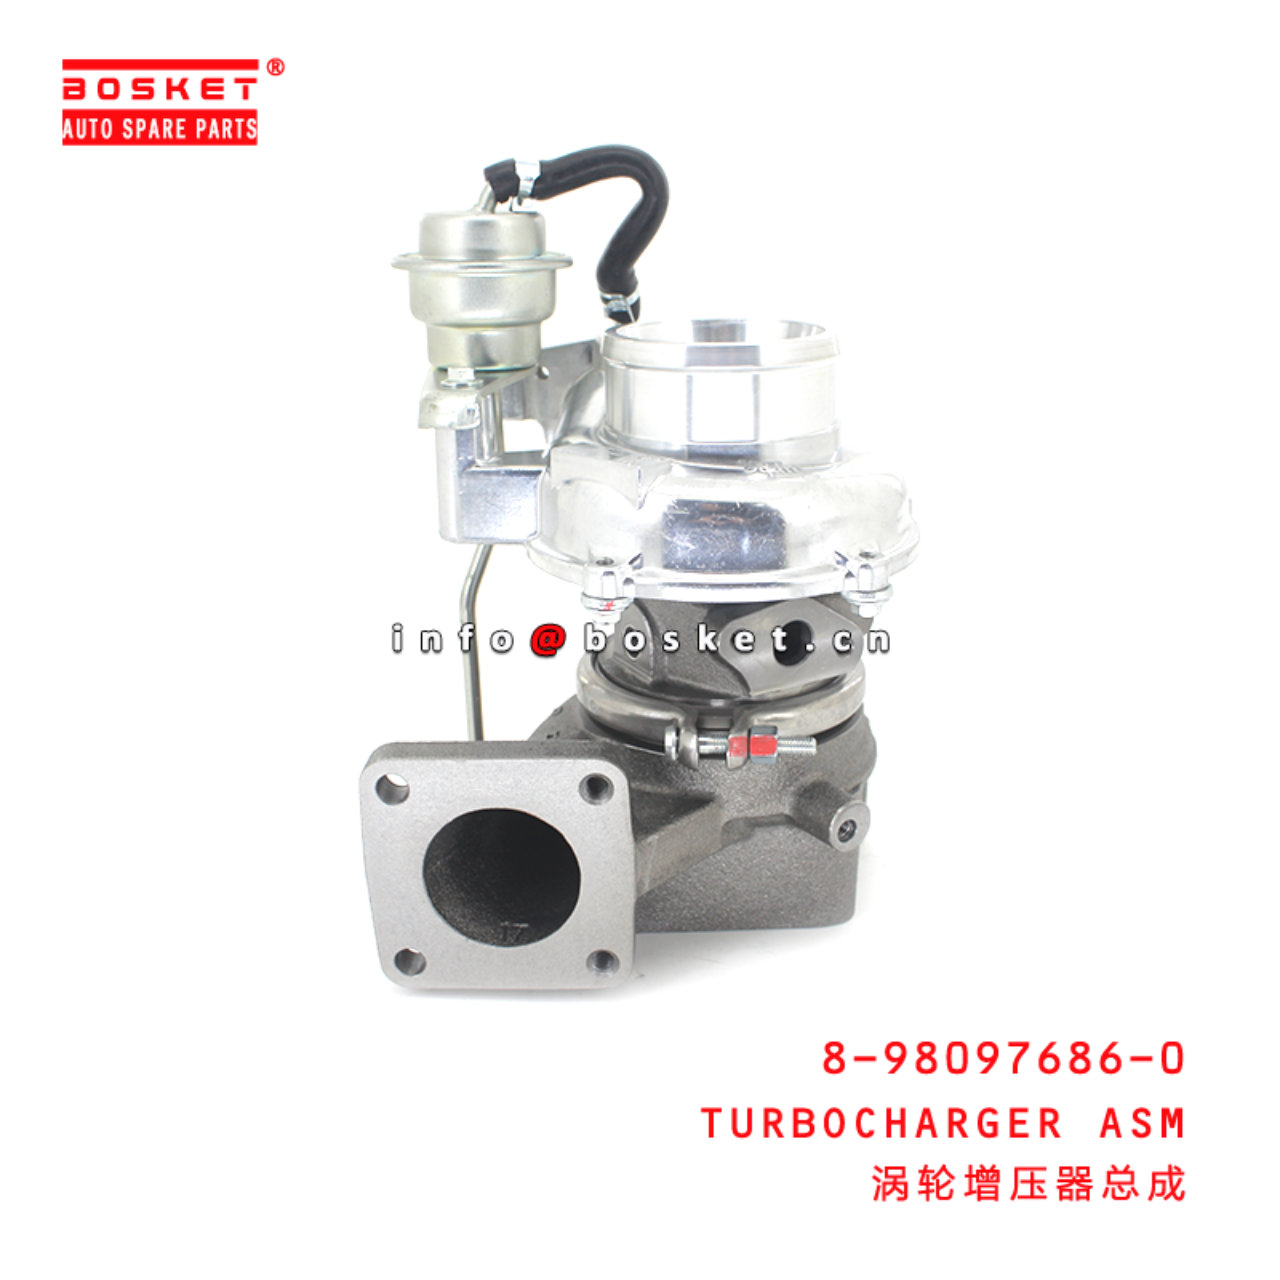 8-98097686-0 Turbocharger Assembly suitable for ISUZU 4JJ1T 